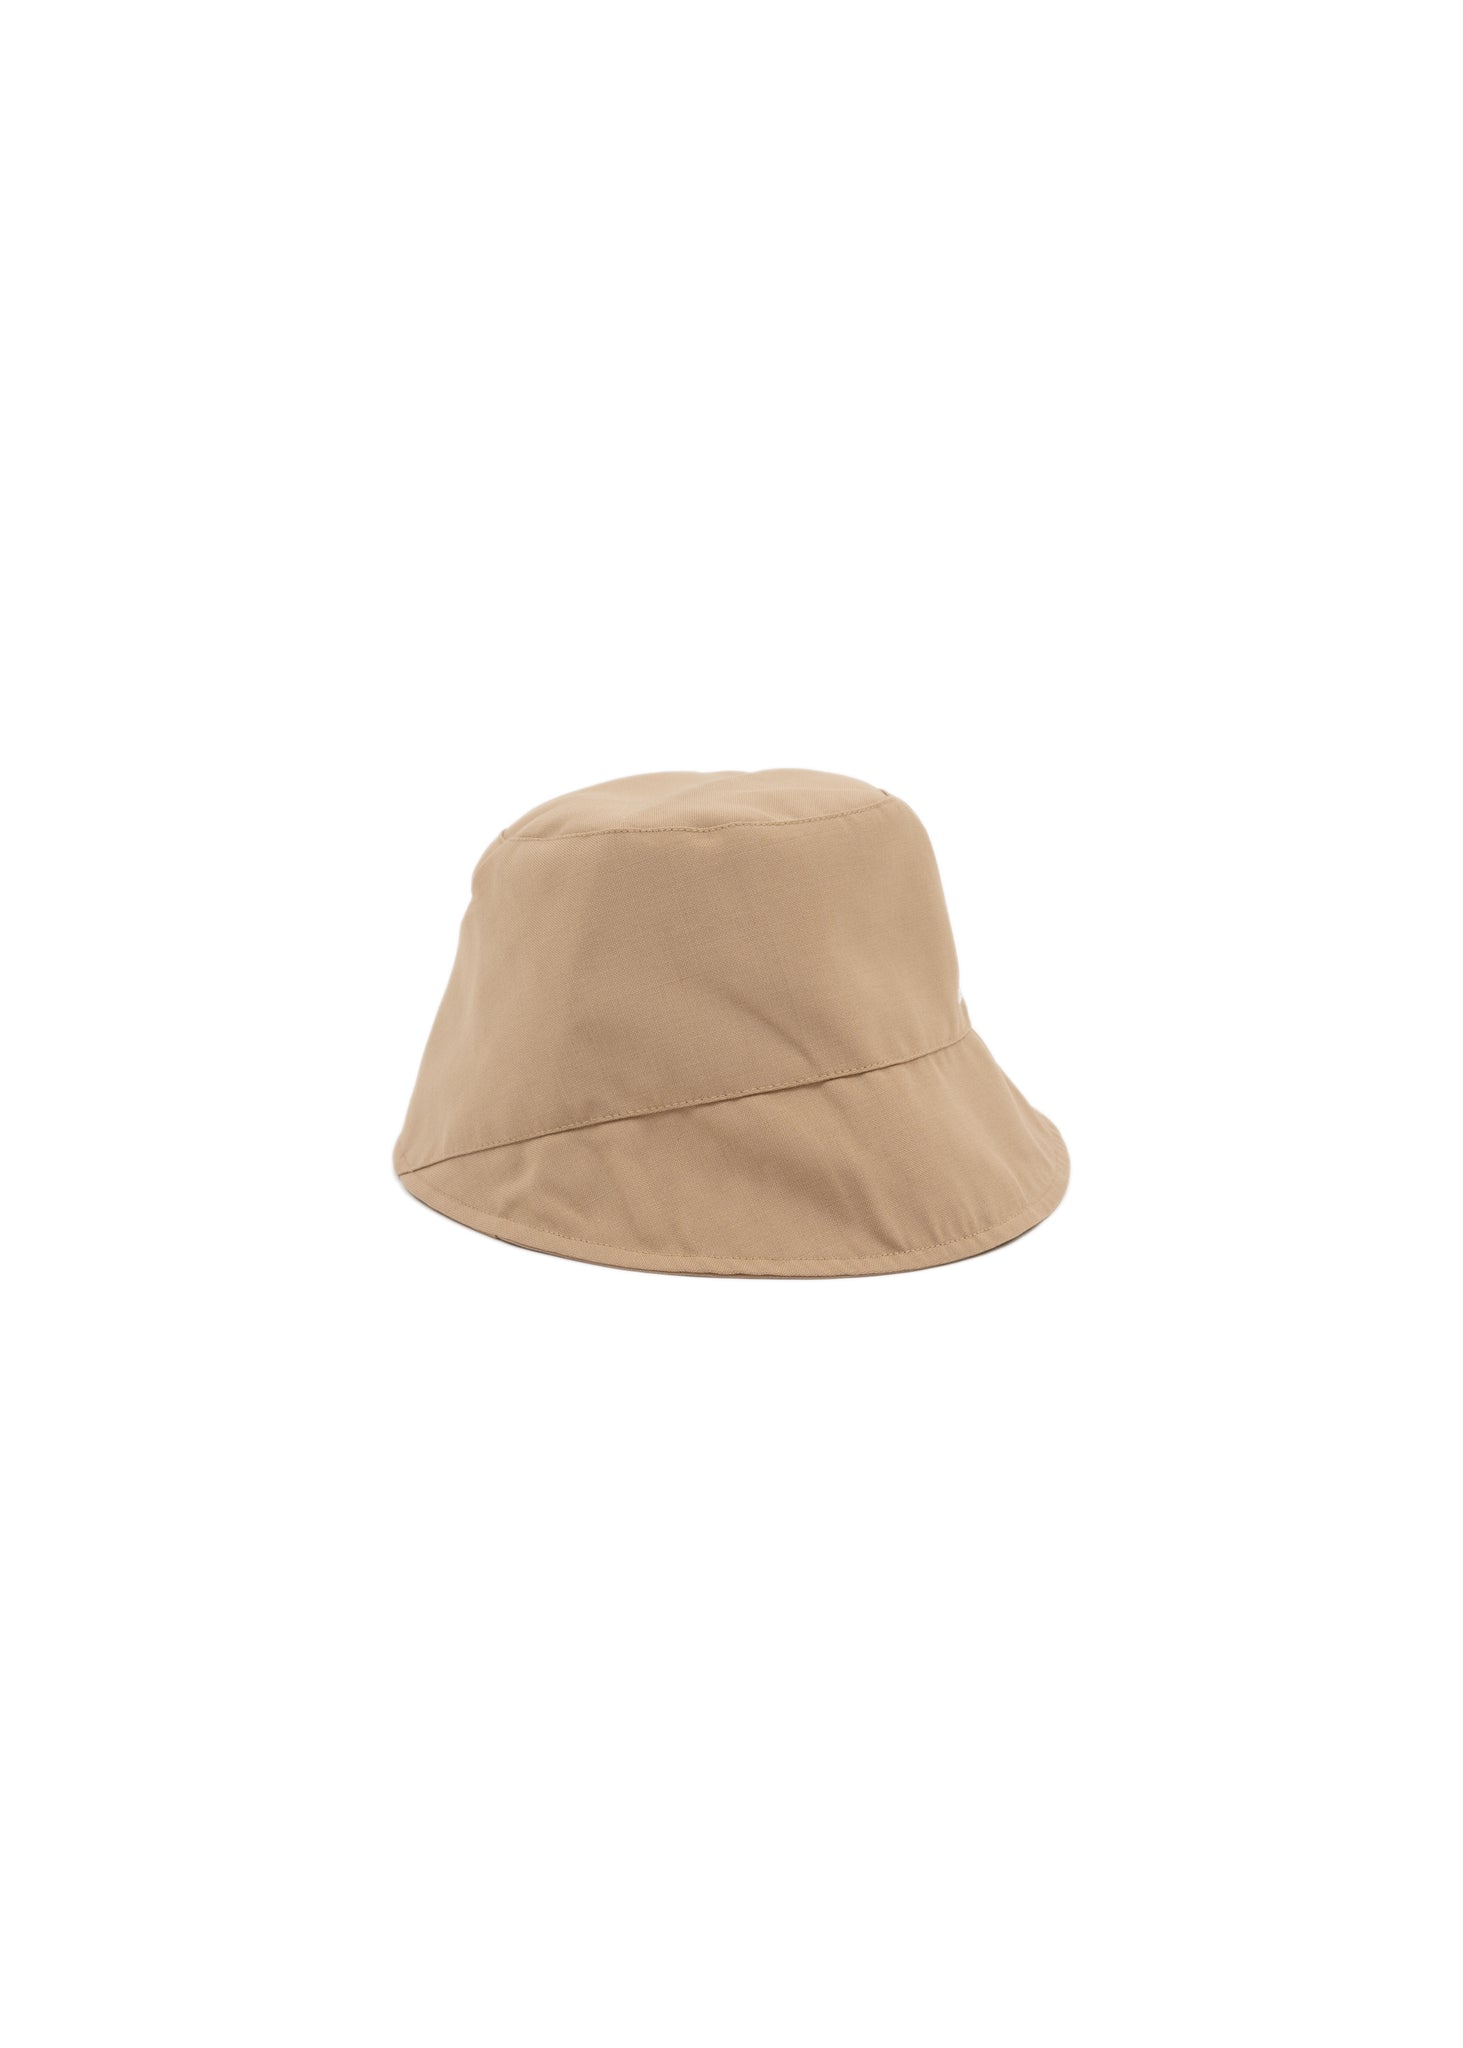 ROARINGWILD: Camel Bucket Hat - 157Moments